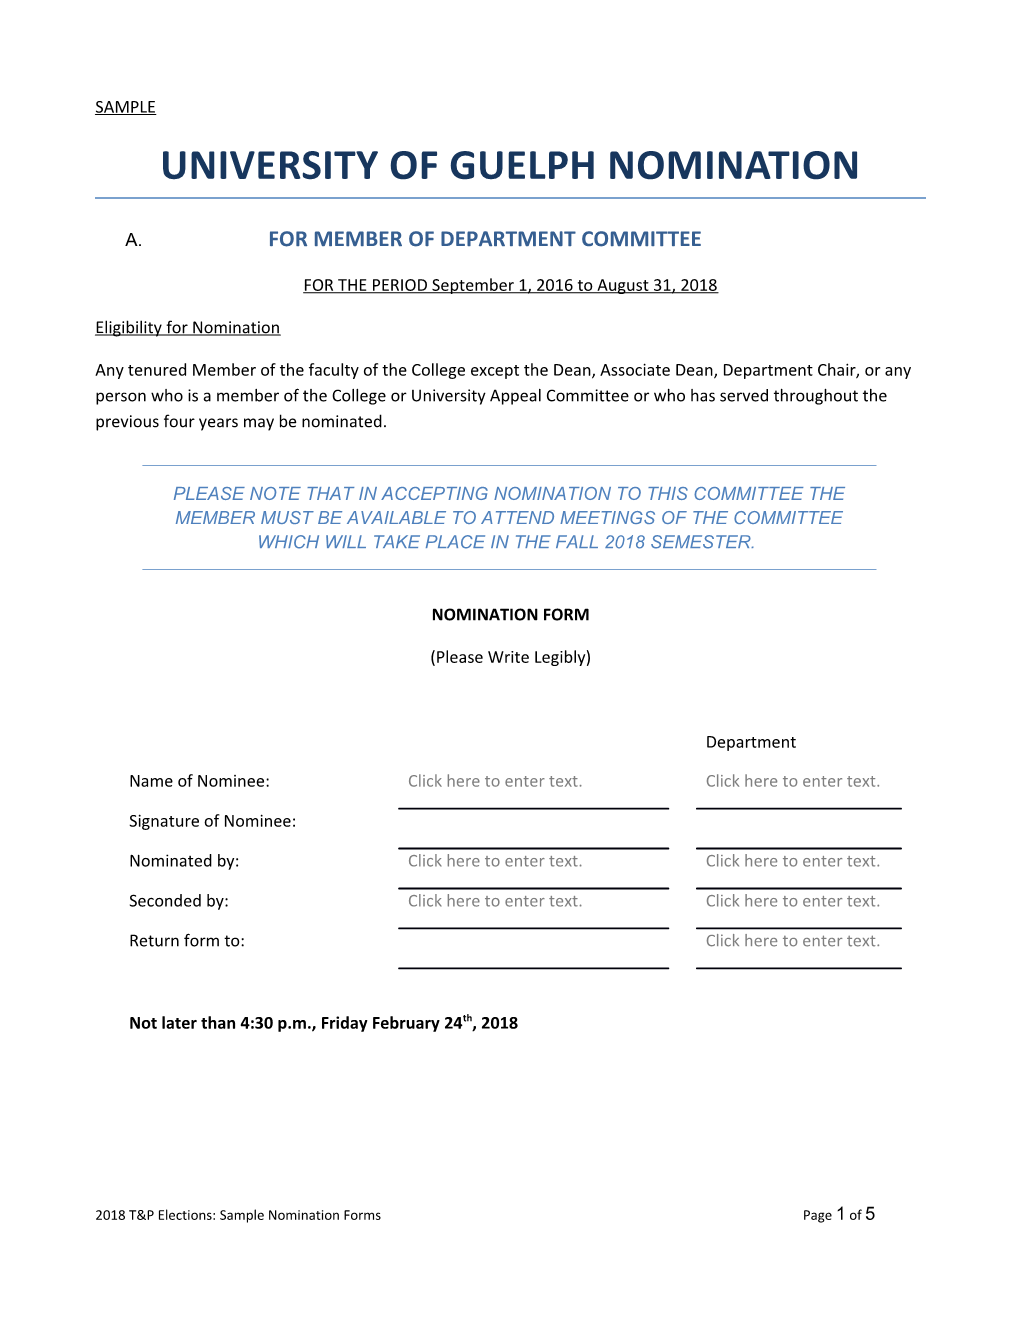 University of Guelph Nomination